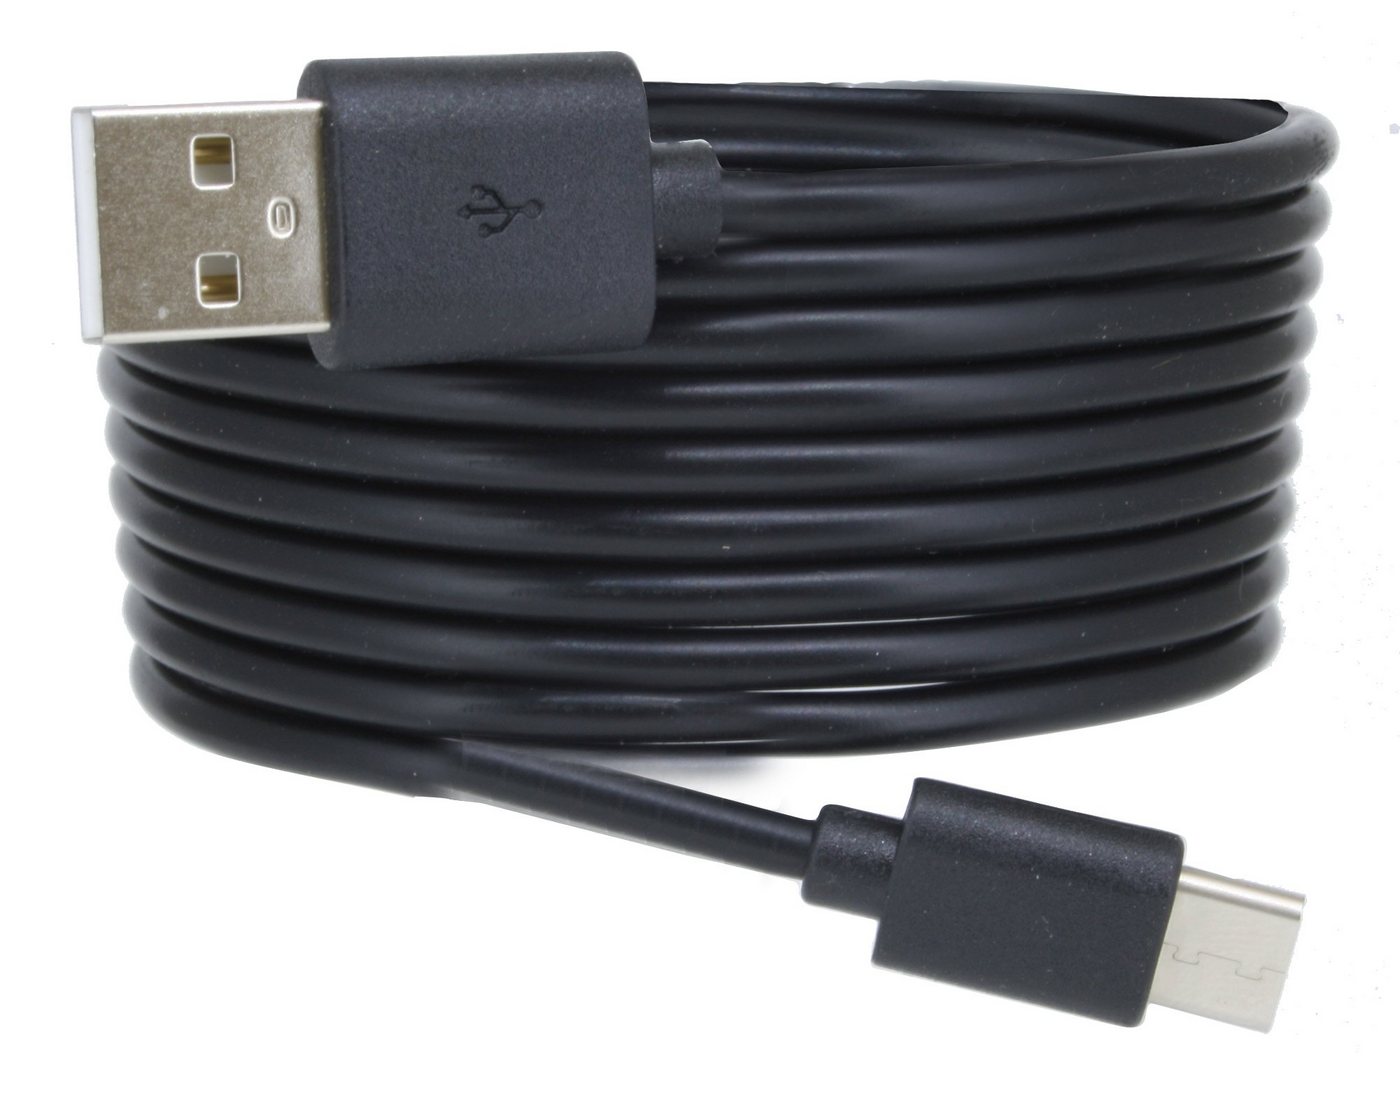 COFI 1453 USB C 3.1 Typ C Ladekabel Datenkabel 2m Extra Lang Smartphone-Ladegerät von COFI 1453